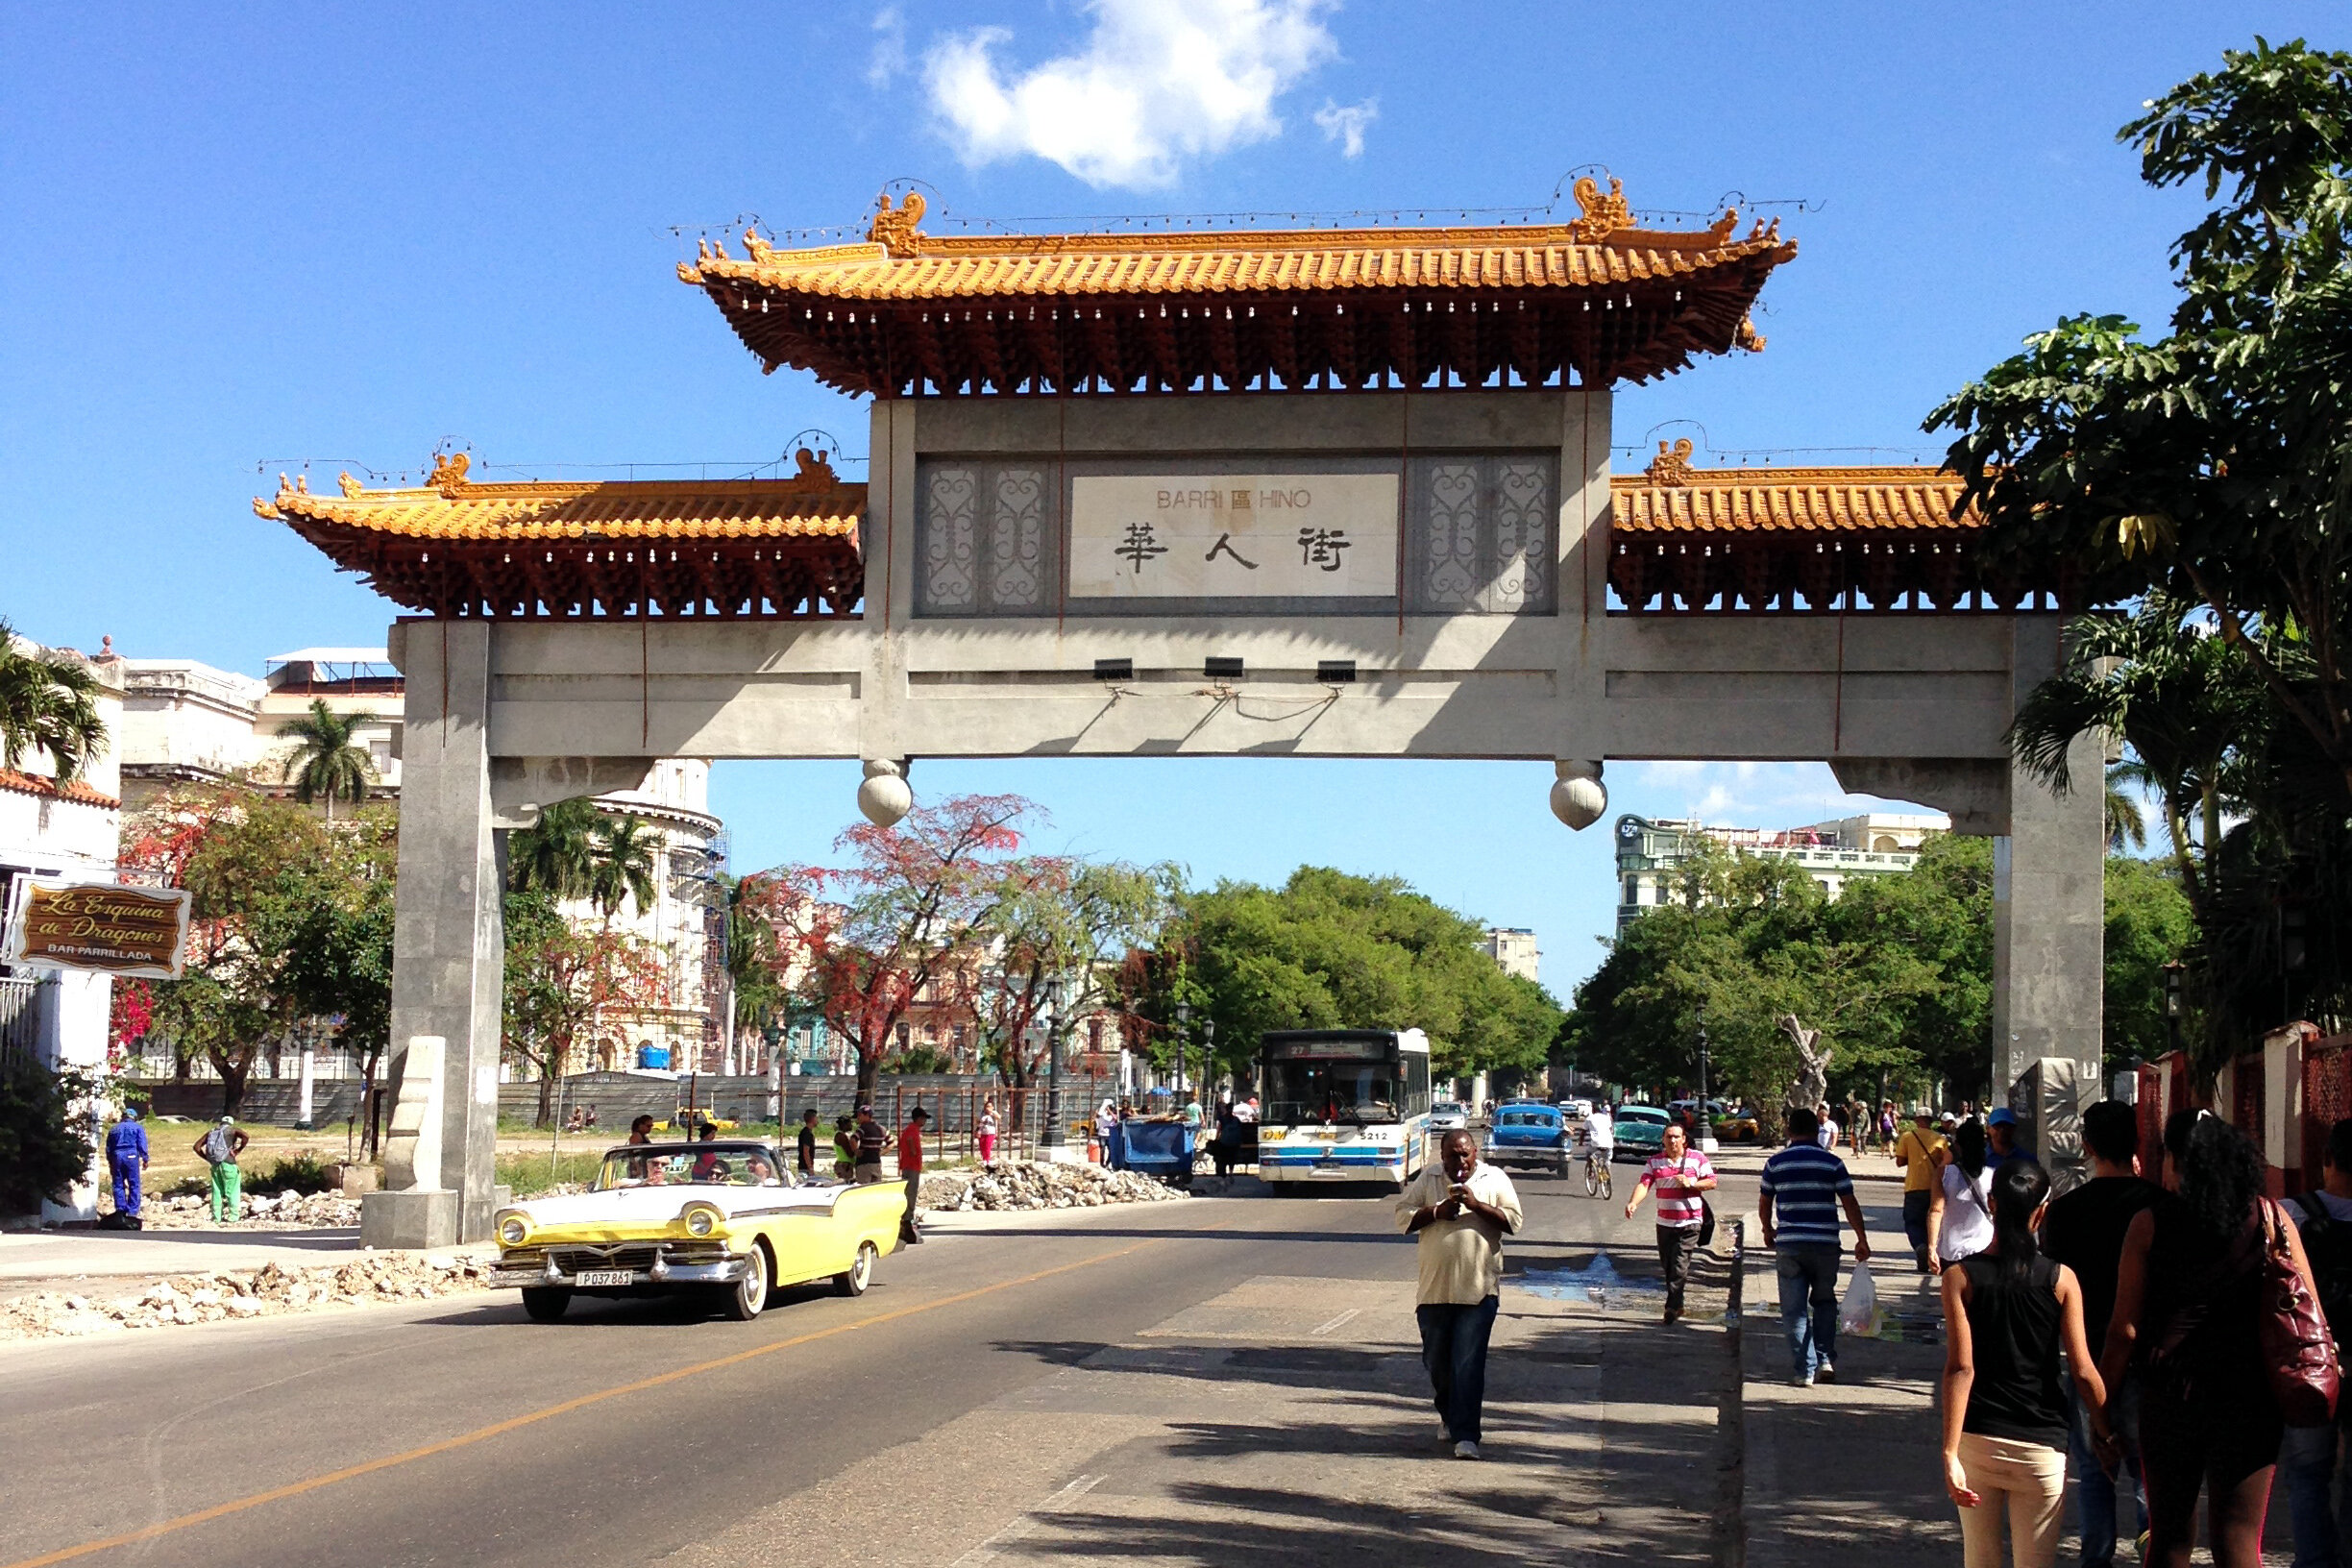 CATALYST - Explore 4 Chinatowns from Around the World